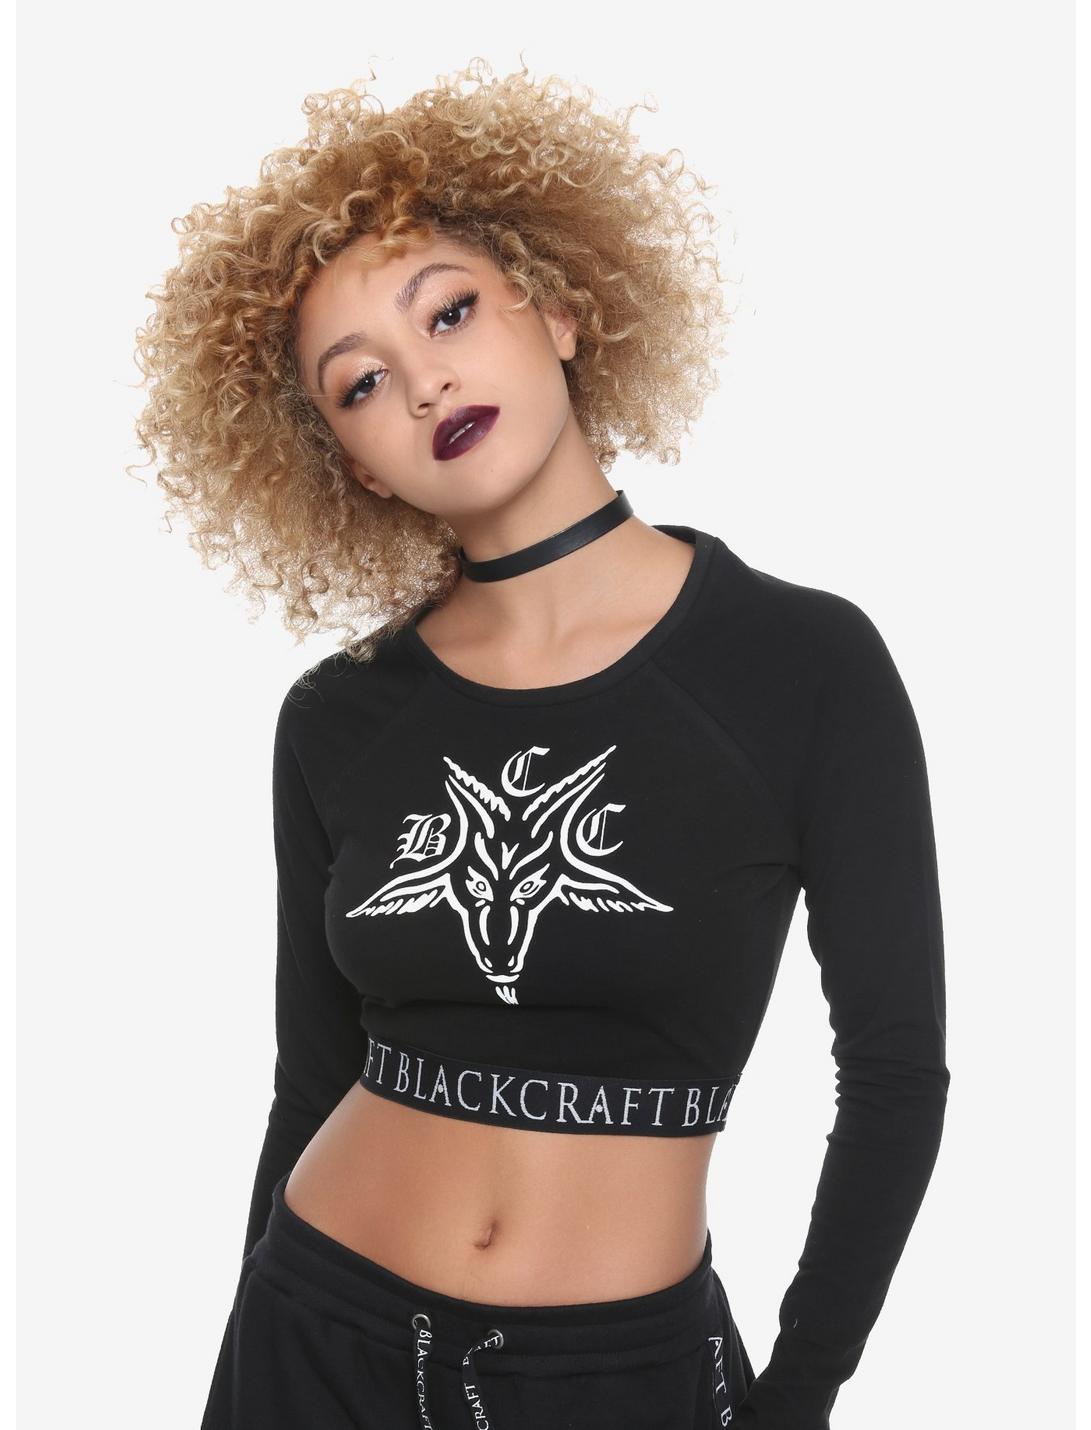 BlackCraft Baphomet Girls Long-Sleeve Crop T-Shirt Hot Topic Exclusive, BLACK, hi-res